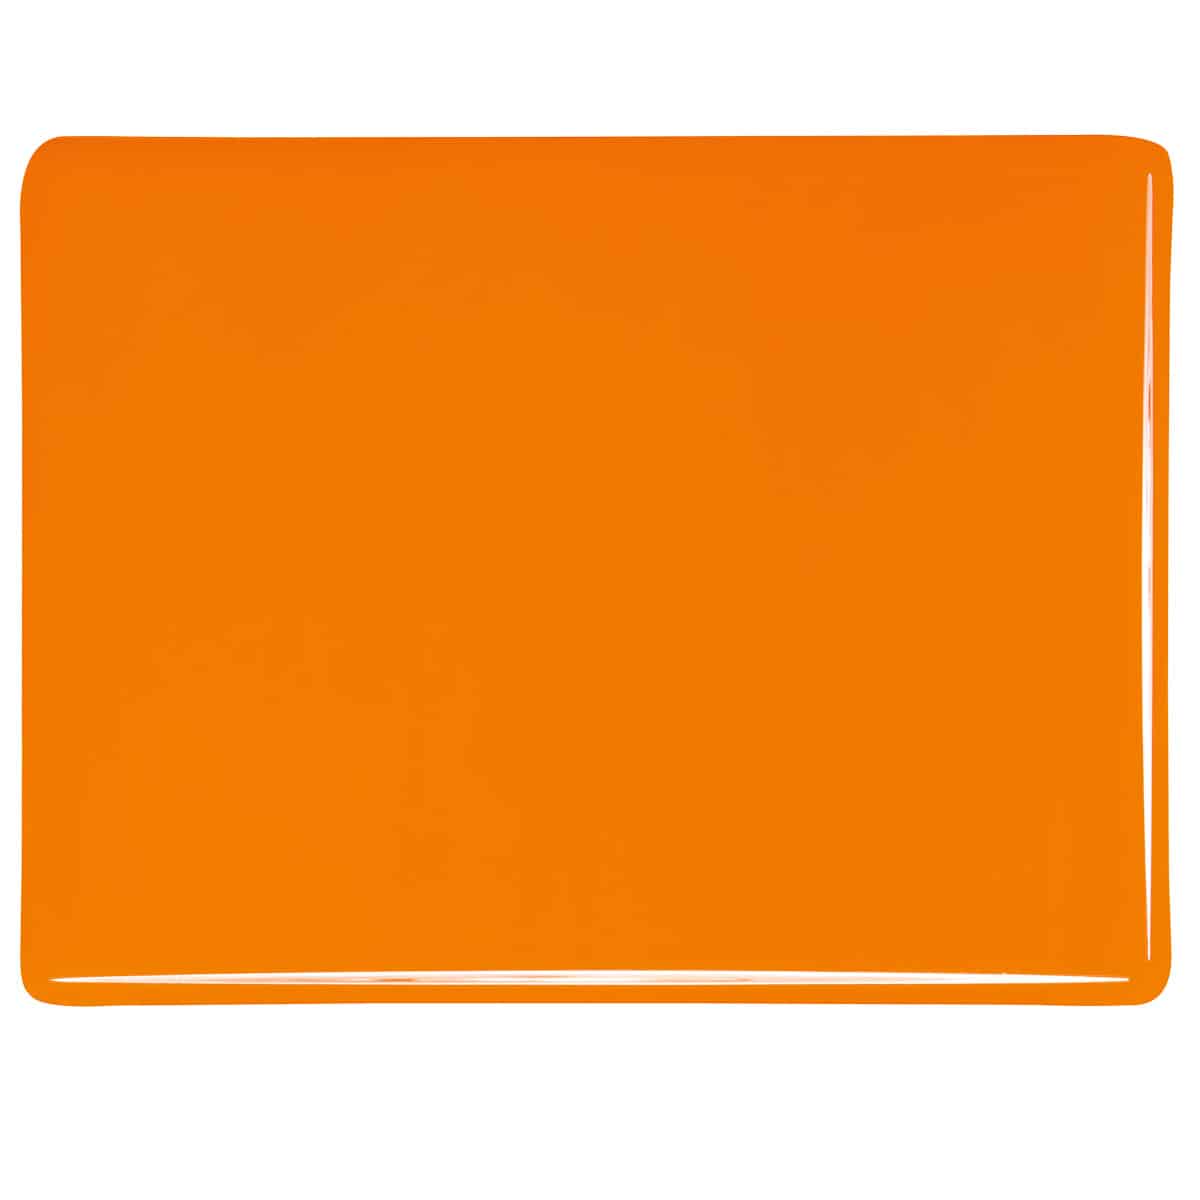 000025 Tangerine Orange Opalescent